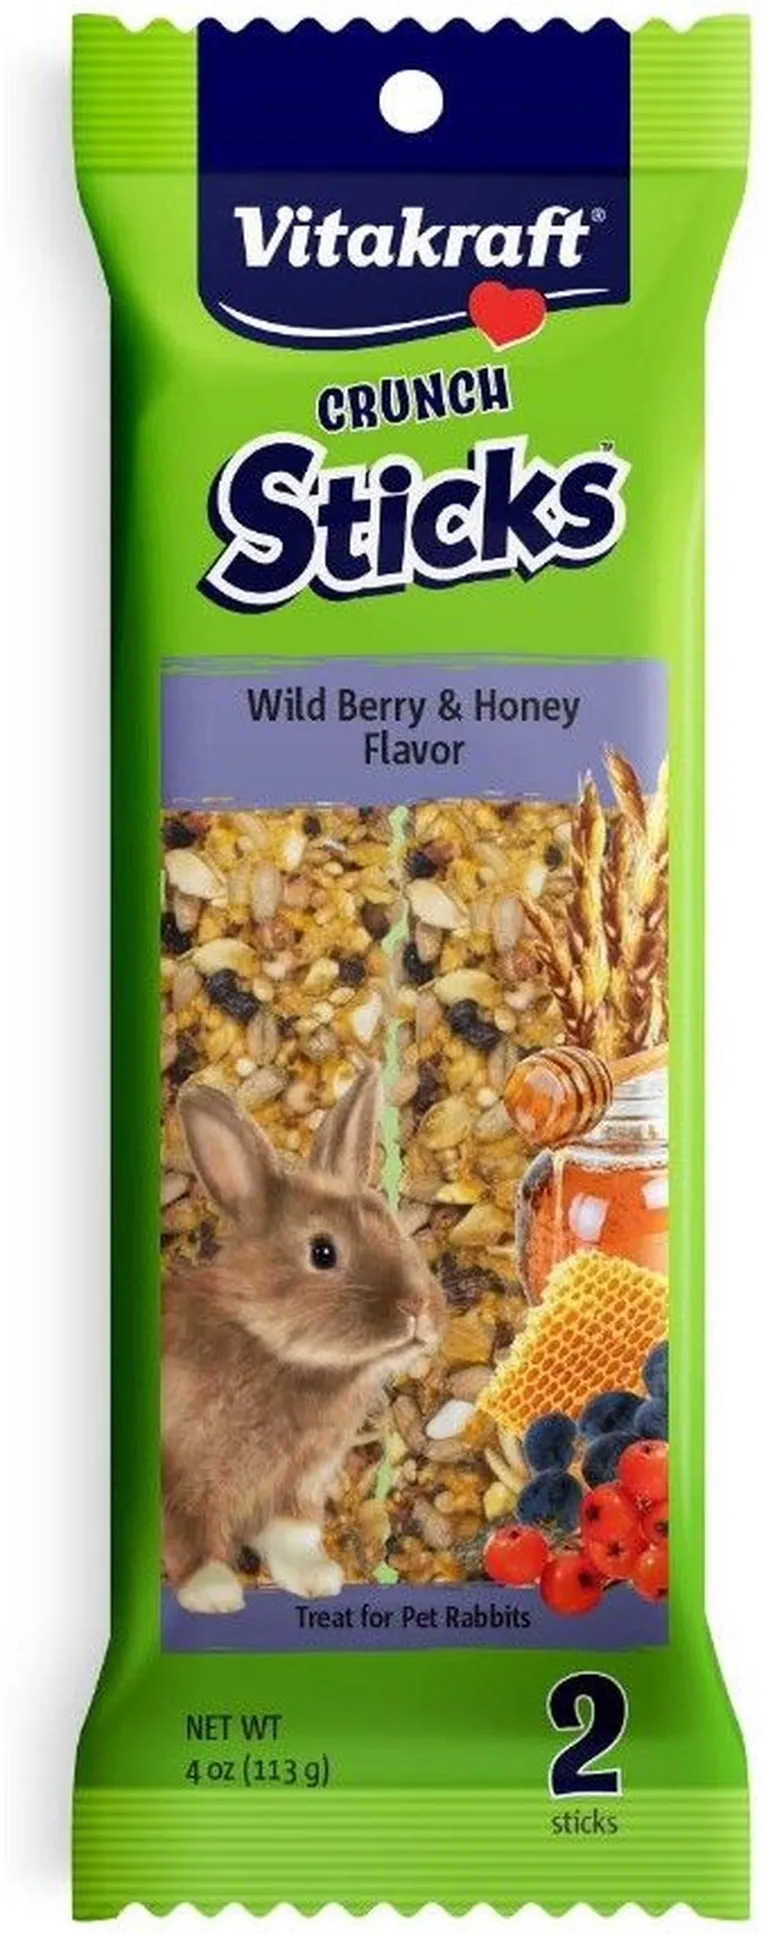 Vitakraft Wild Berry and Honey Flavor Crunch Sticks Photo 1